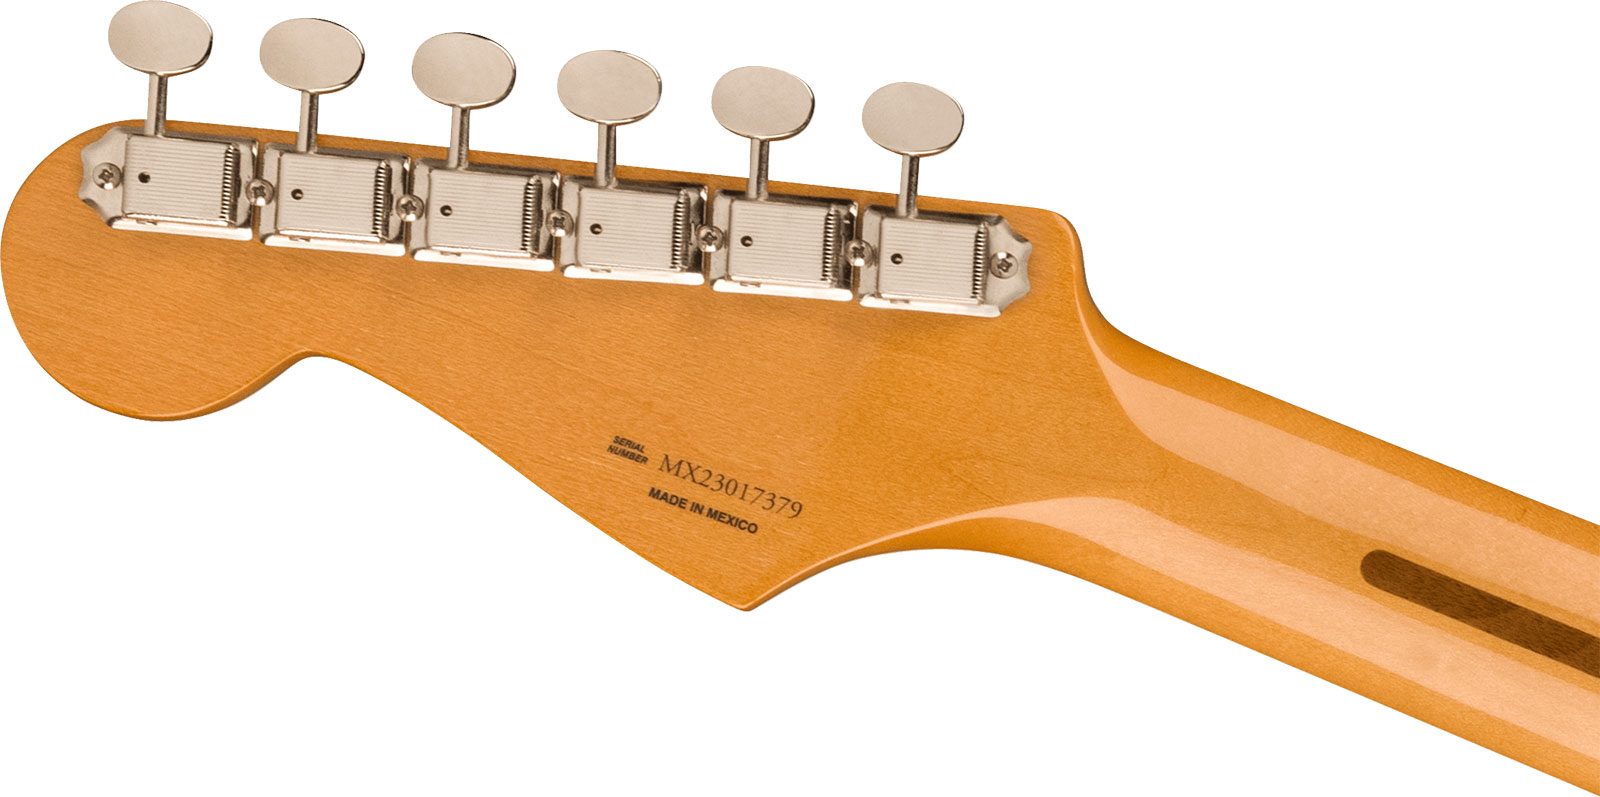 Fender Strat 50s Vintera 2 Mex 3s Trem Mn - 2-color Sunburst - Elektrische gitaar in Str-vorm - Variation 3